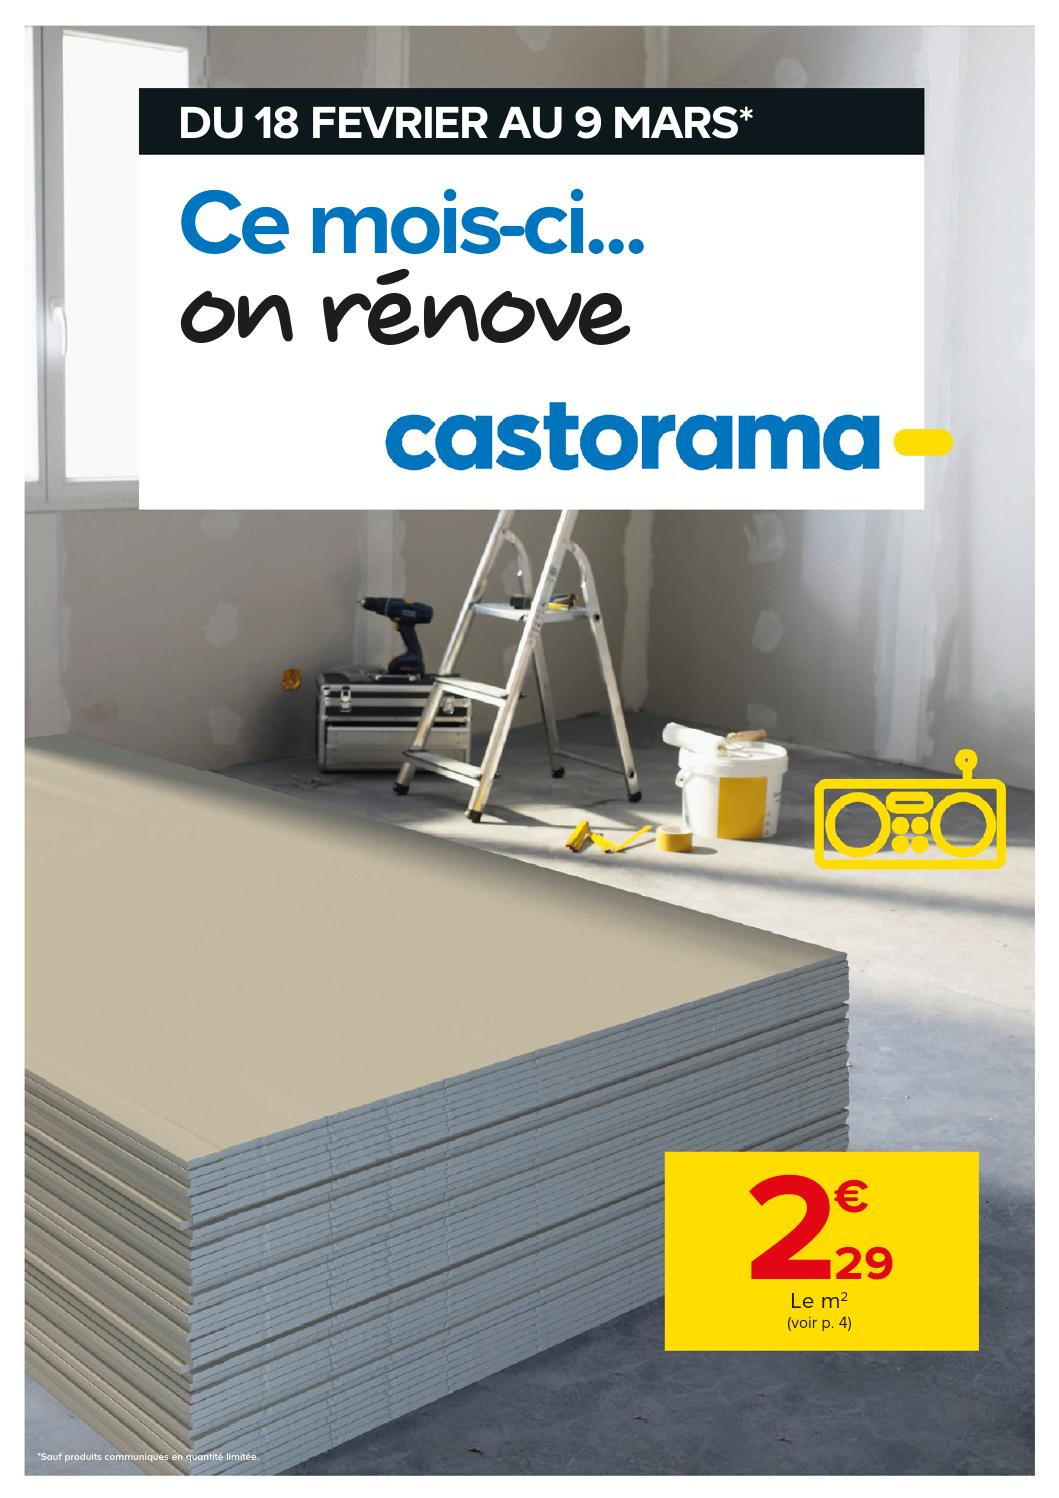 Castorama Catalogue 18Fevrier 9Mars2015 By Promocatalogues pour Tete De Robinet Castorama